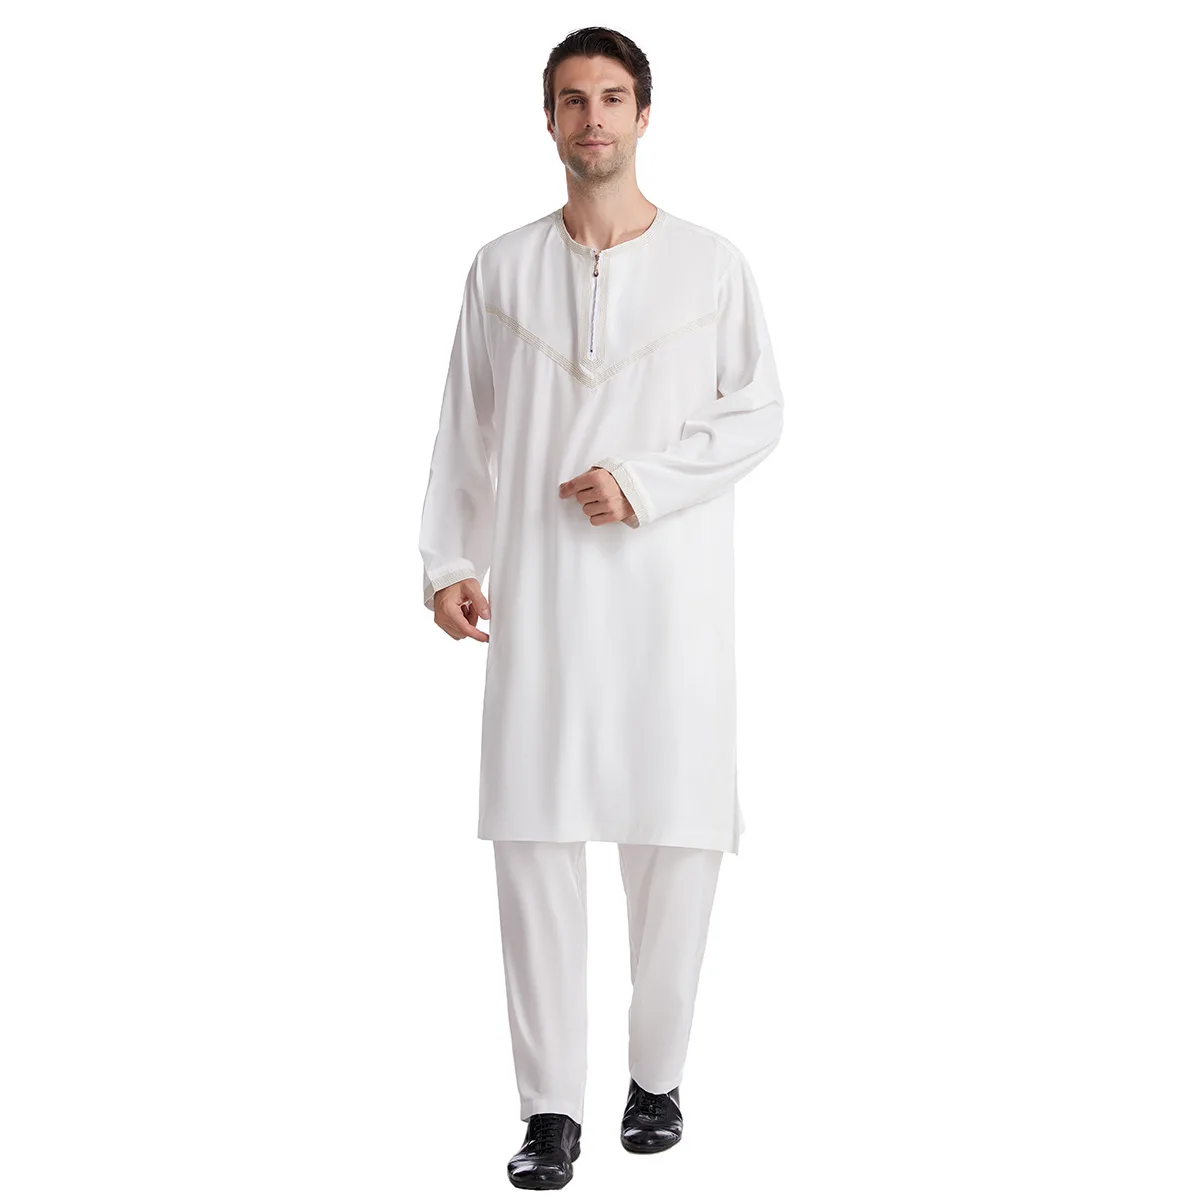 Vestido muçulmano Jubba Thobe masculino, pano tradicional islâmico, Abaya masculino, calça superior, patchwork fashion, traje de oração árabe saudita